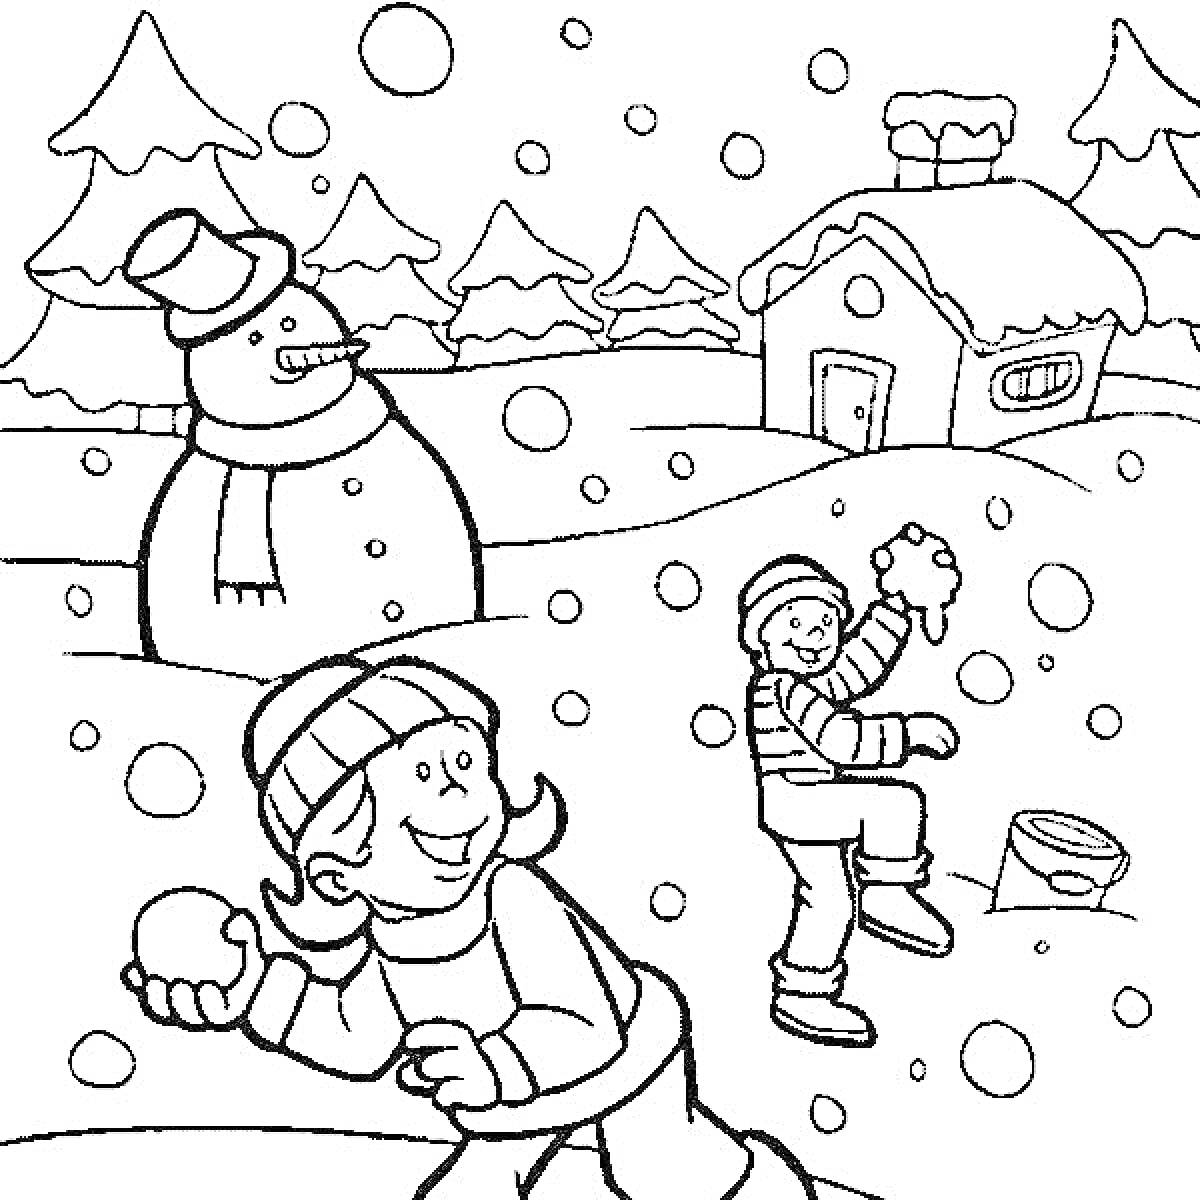 Раскраска Зимняя игра детей со снежками возле снеговика и домика